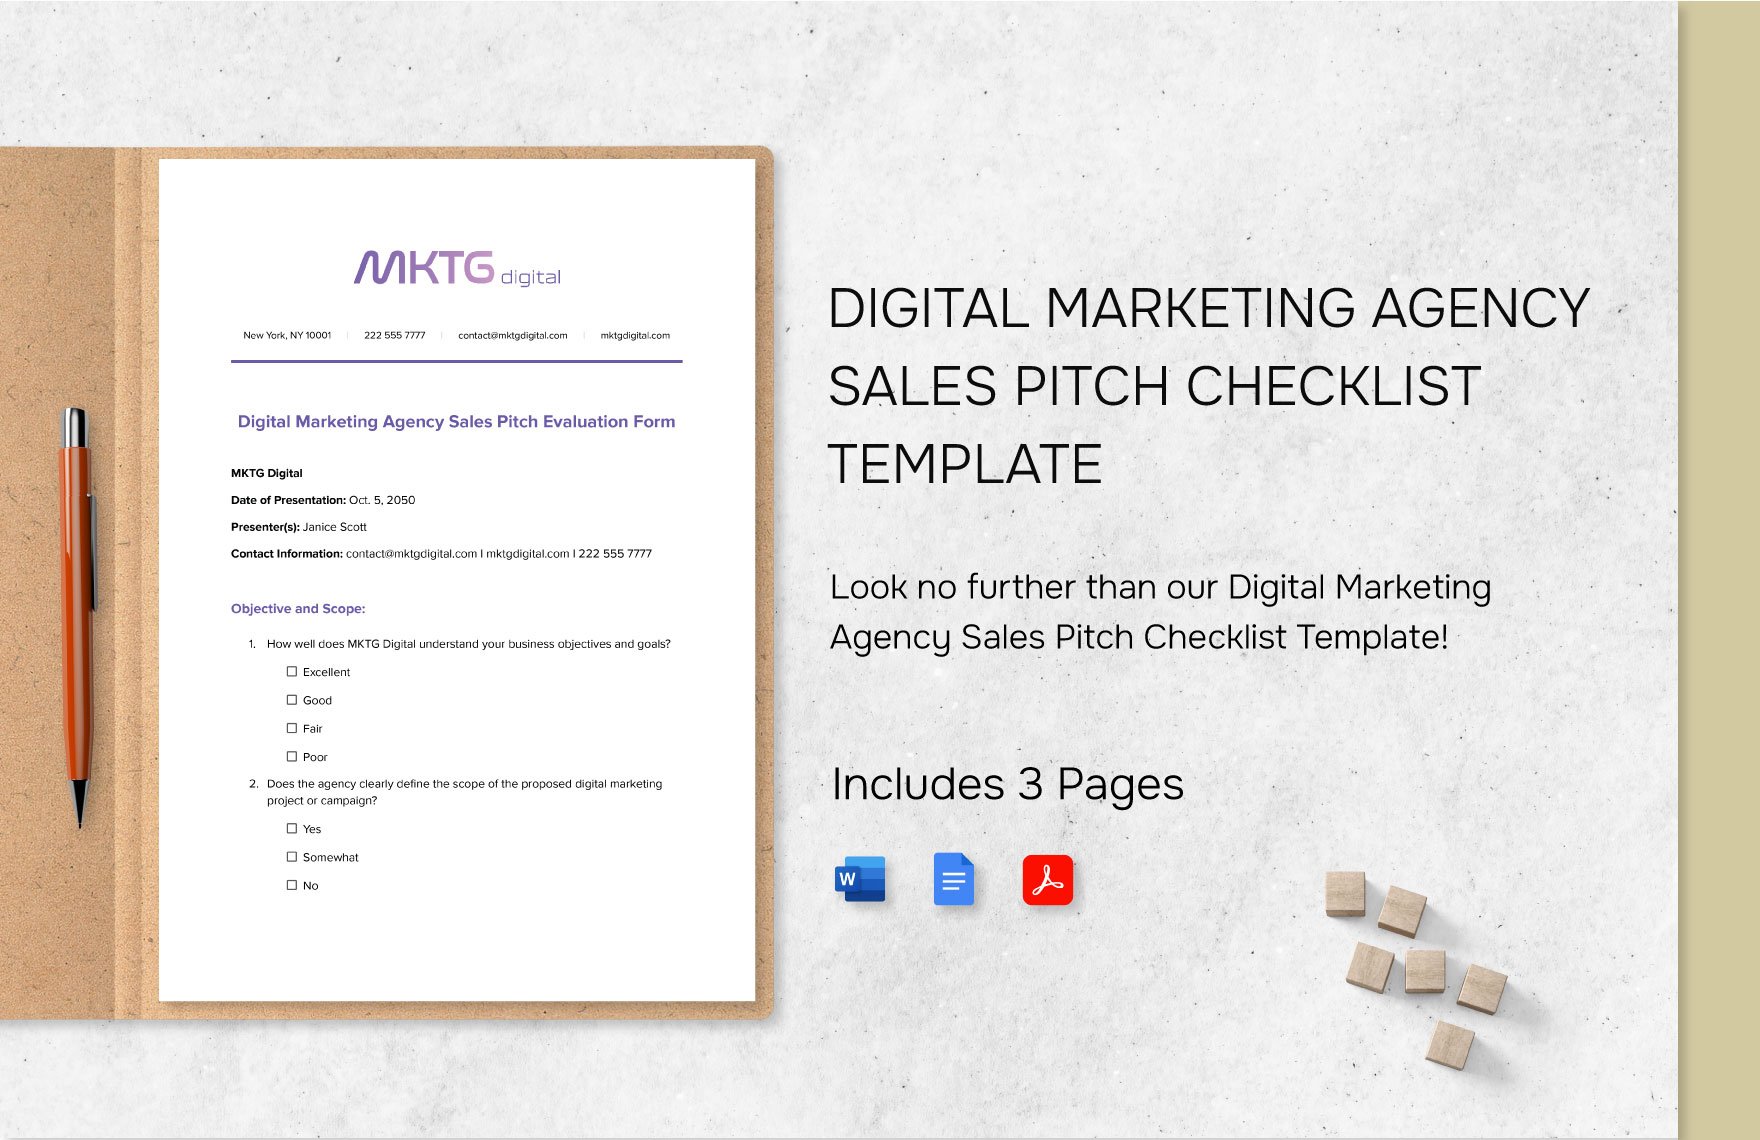 Digital Marketing Agency Sales Pitch Checklist Template